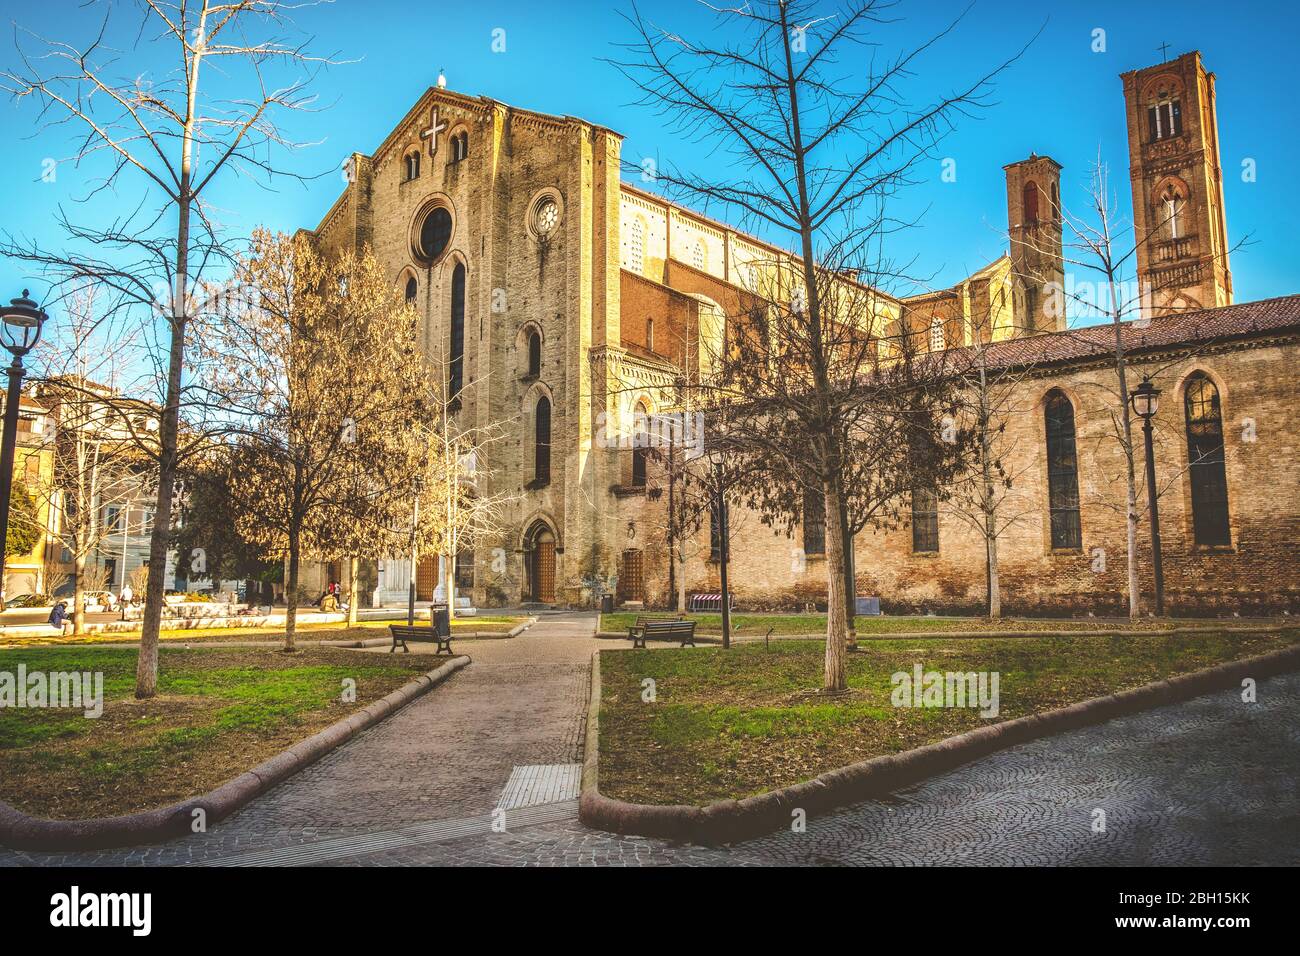 Italy local landmarks of emilia romagna region - Bologna - Piazza San Francesco square and church Stock Photo